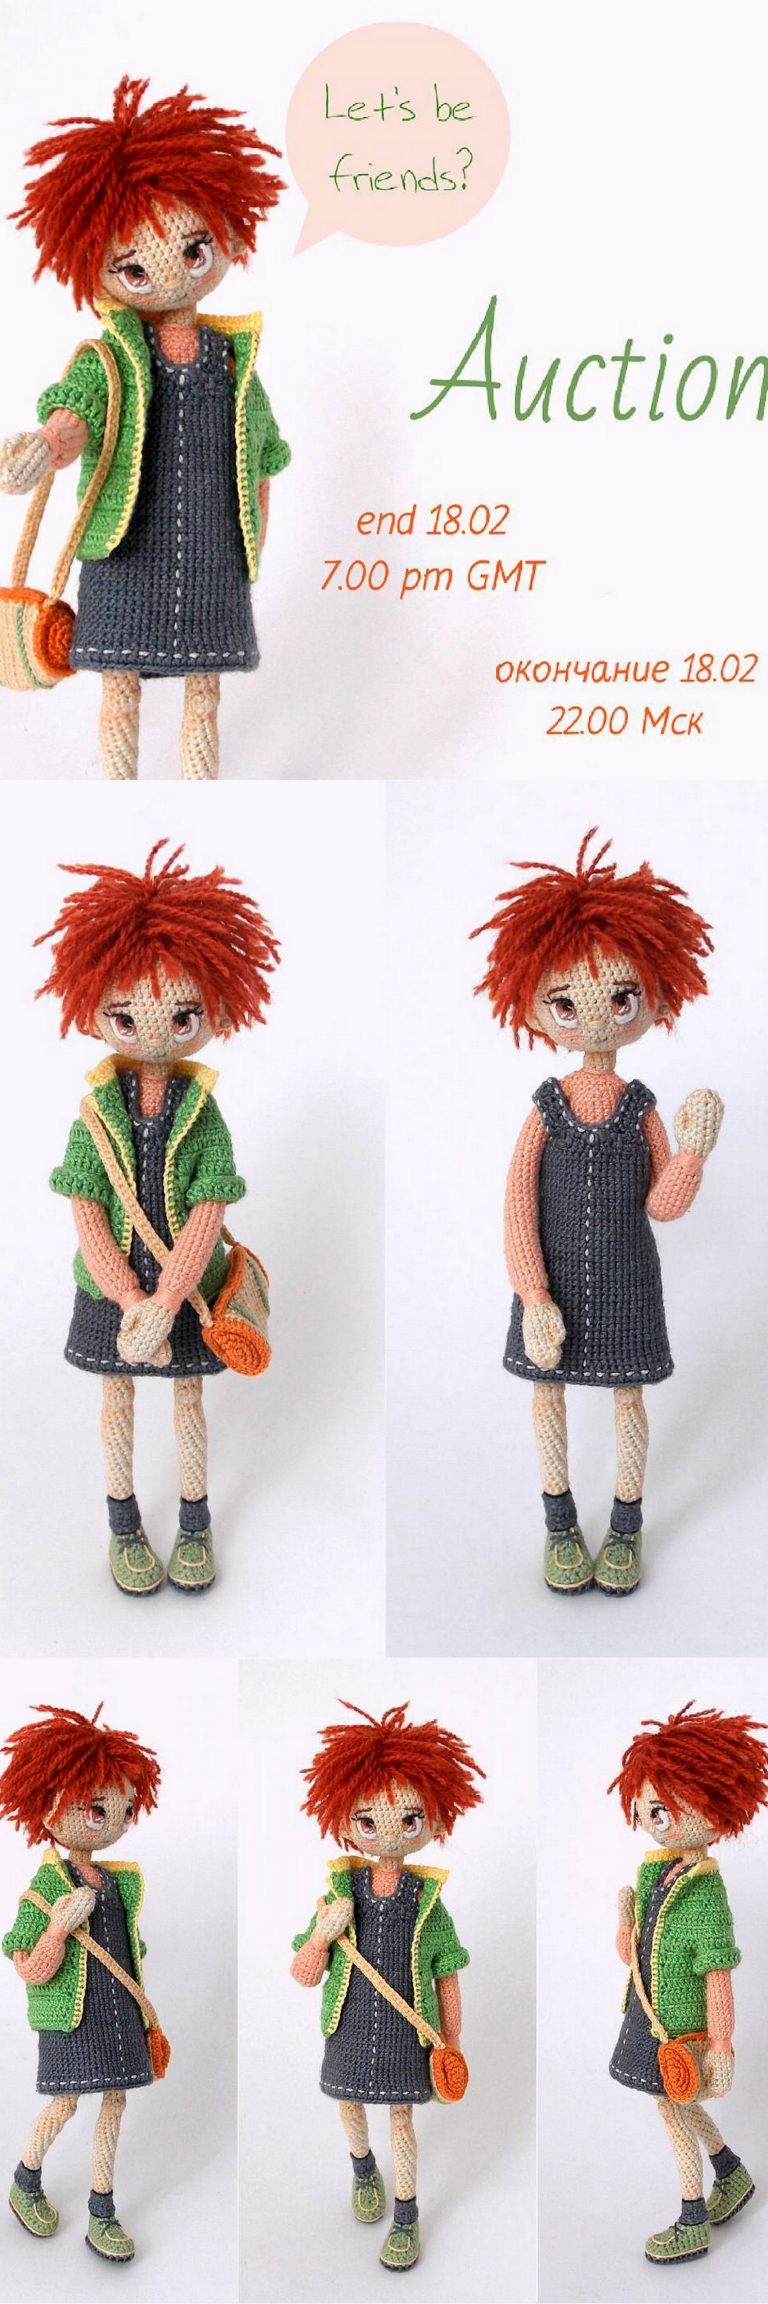 Amigurumi Doll 20 Top Best Crochet Patterns